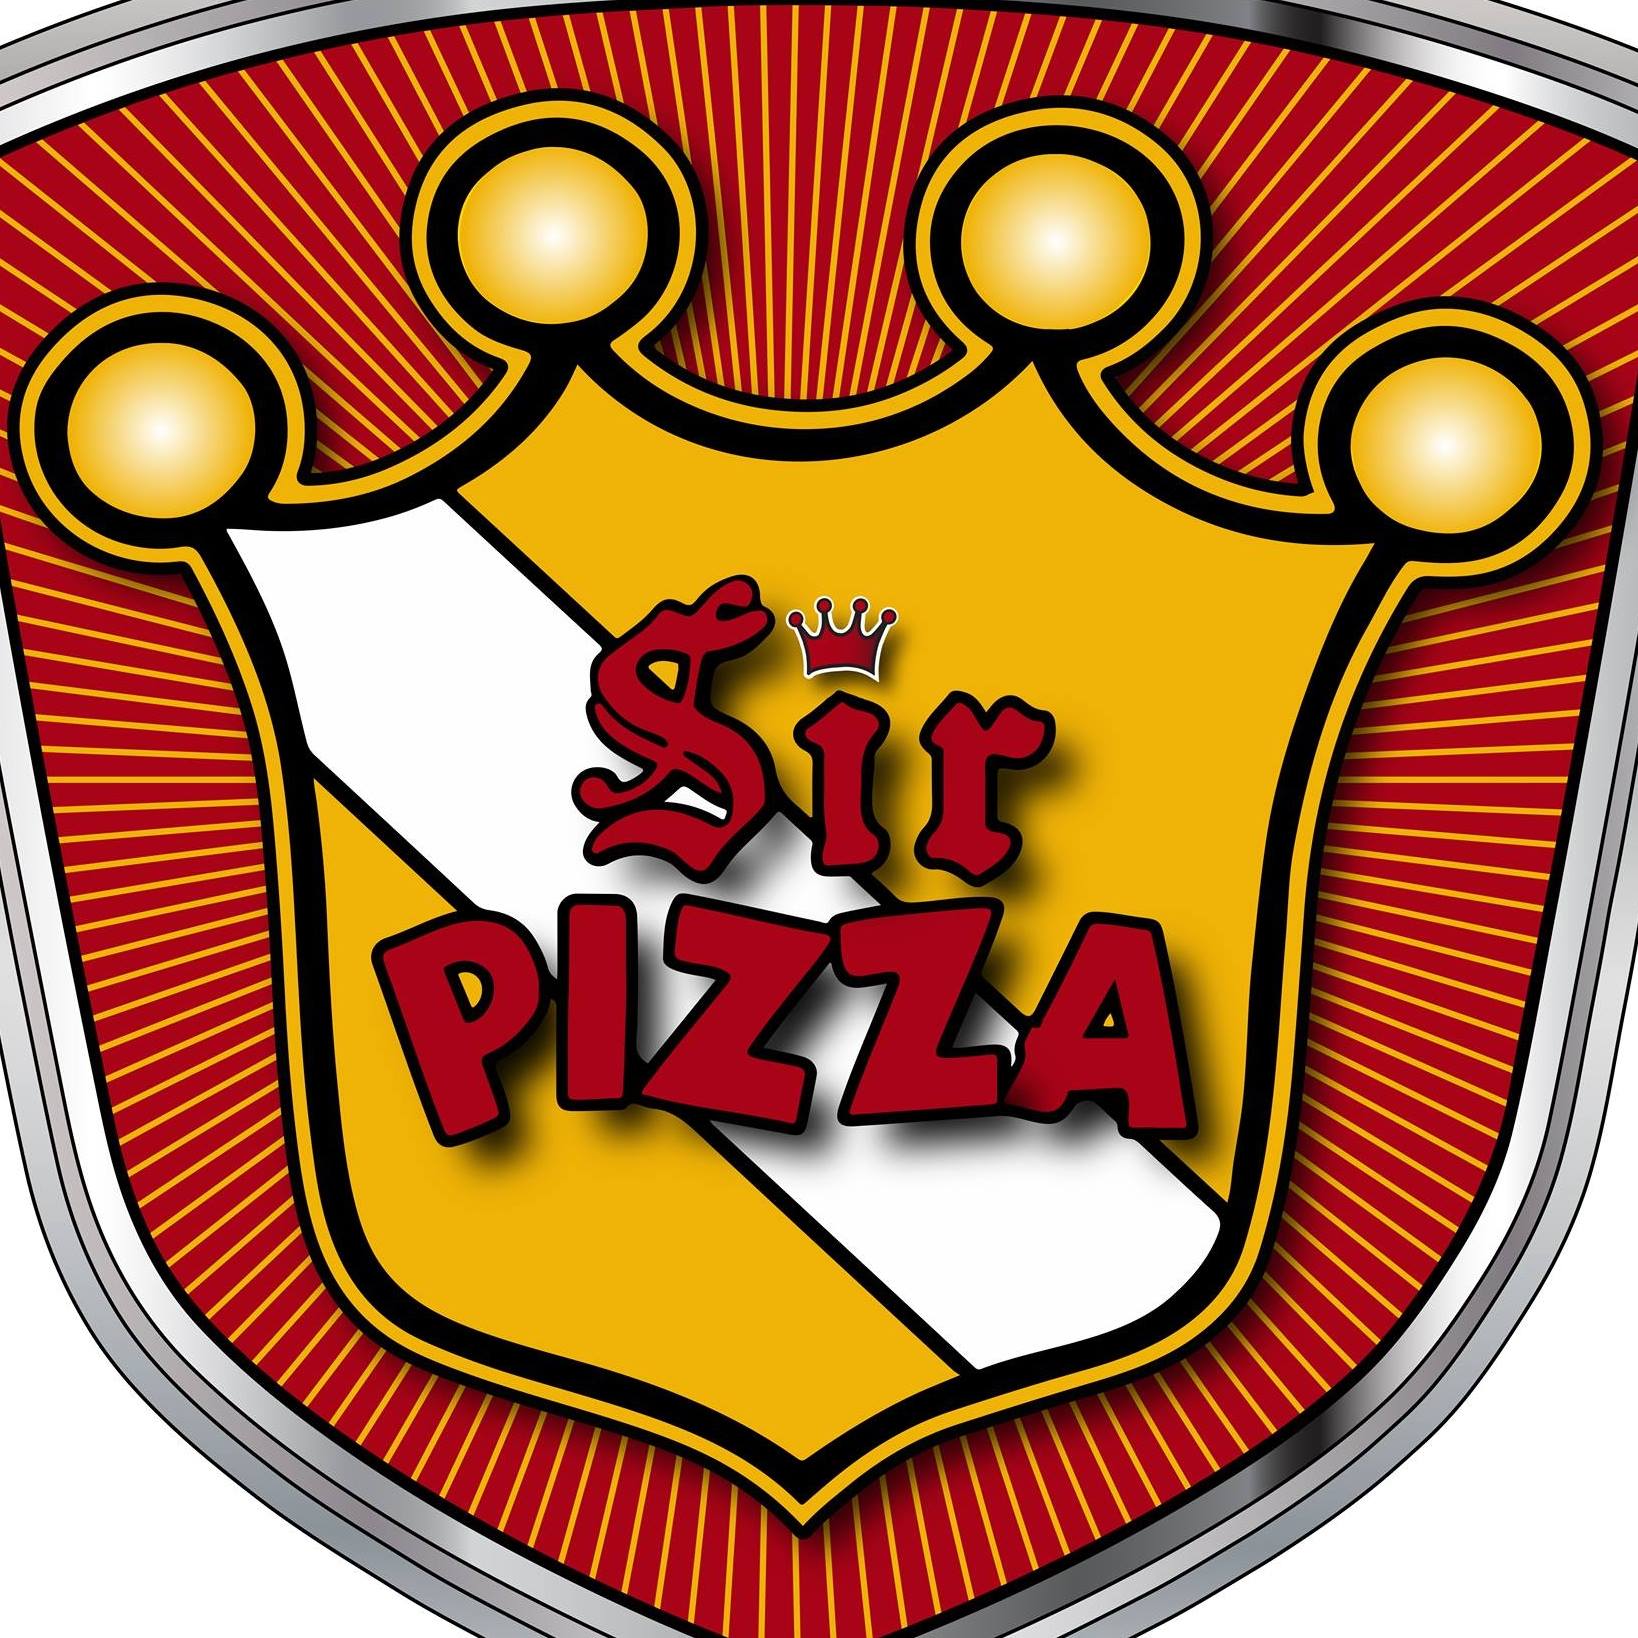 Sir Pizza Restaurants